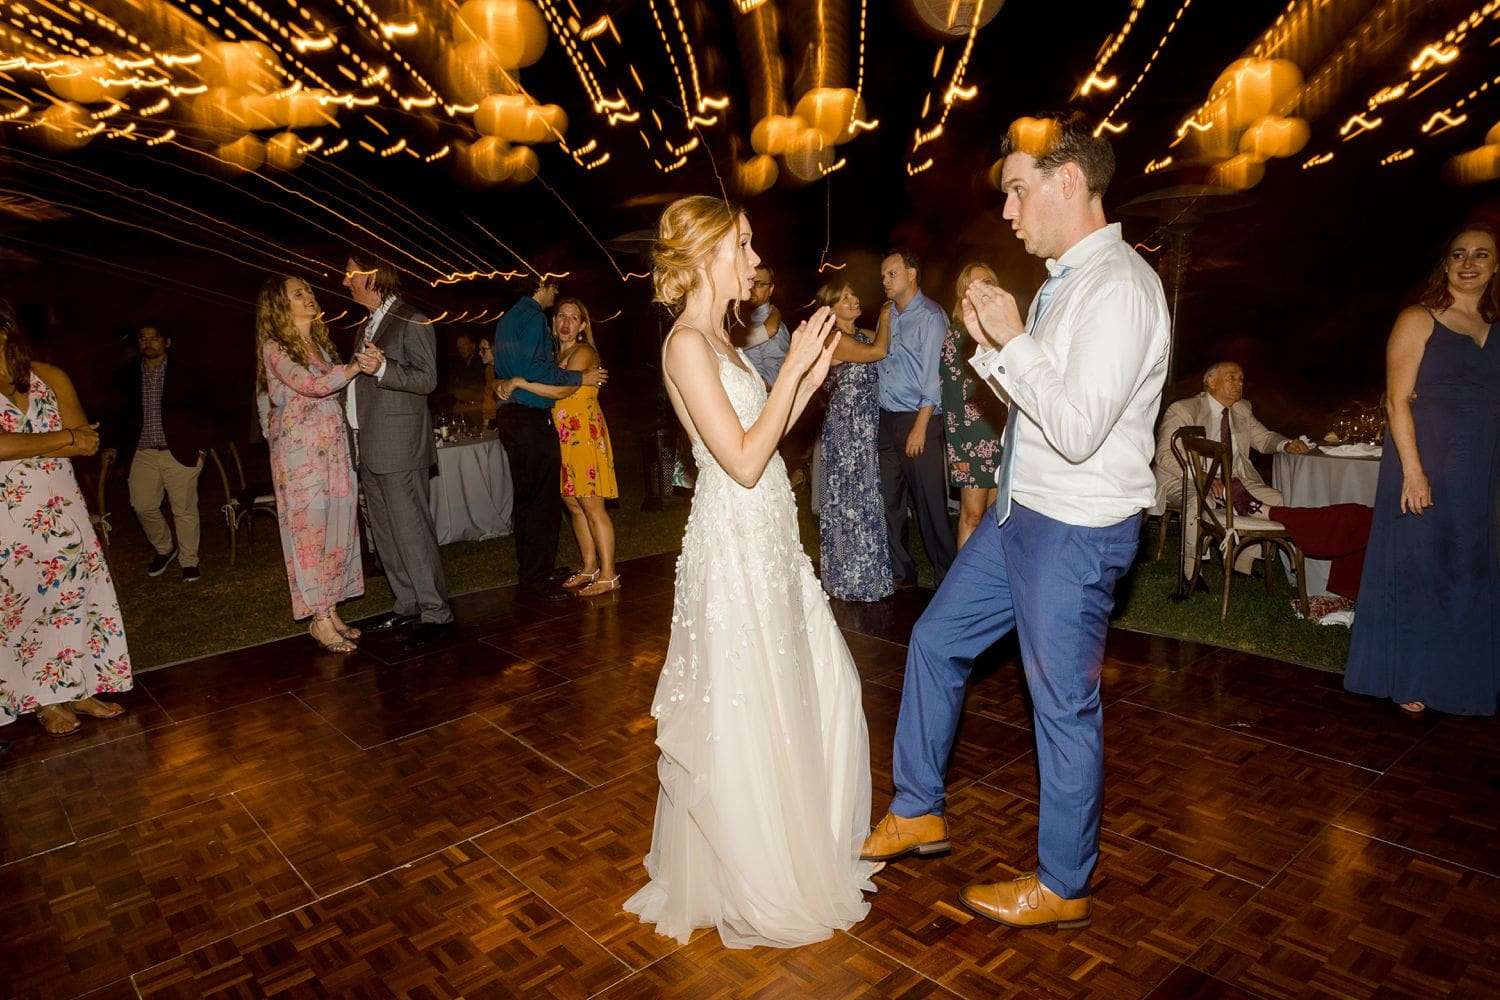 wedding reception dancing photos